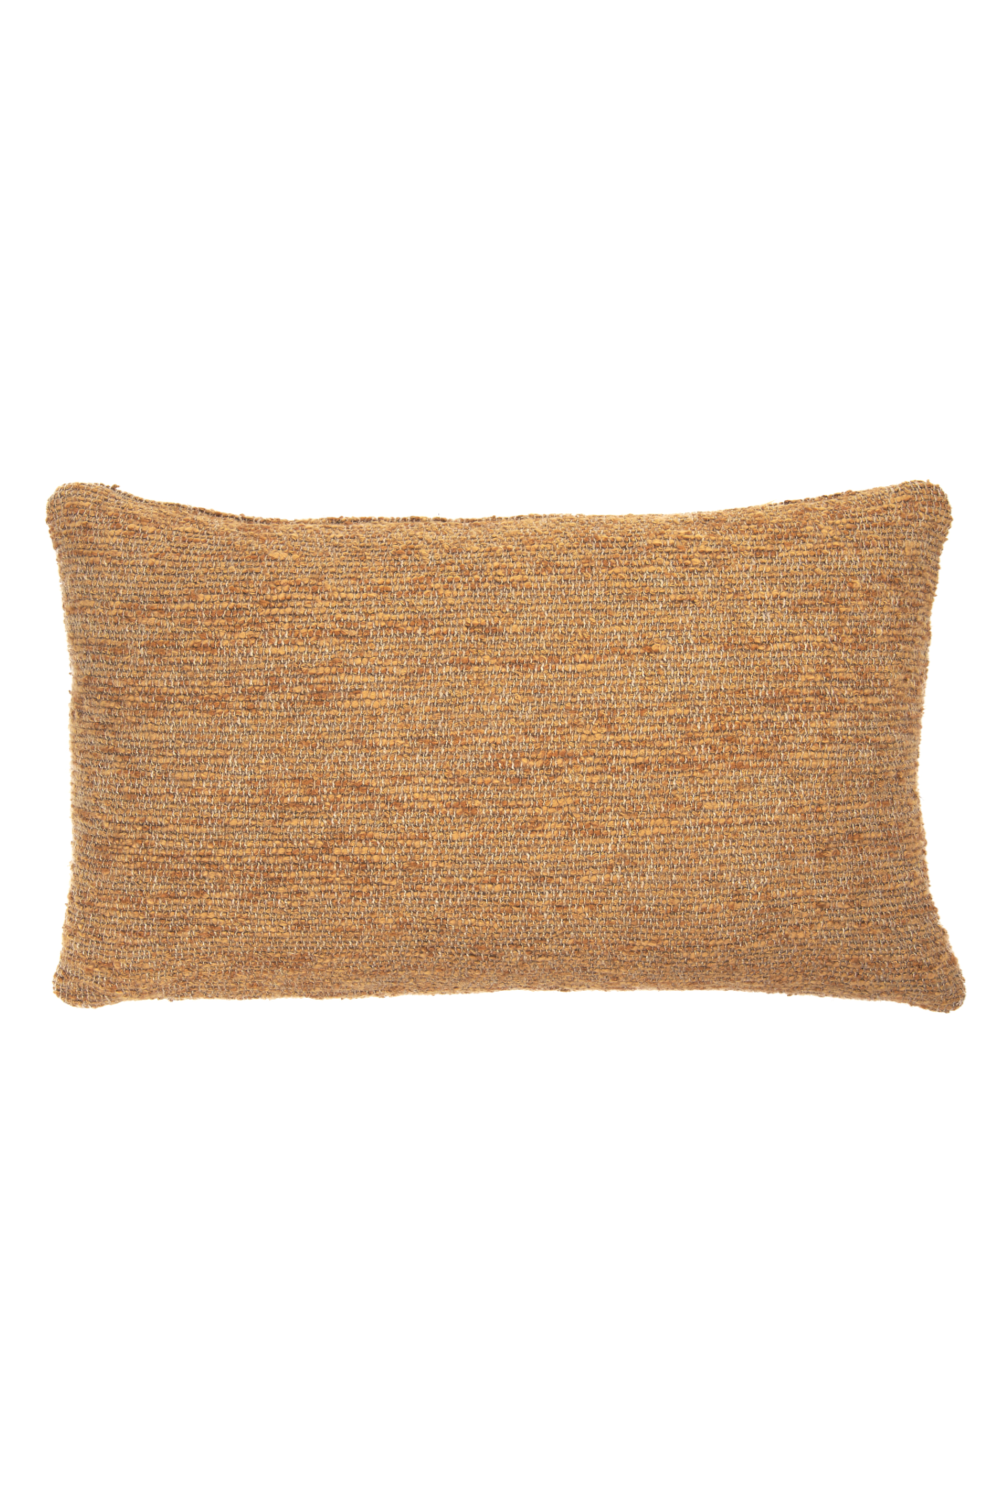 Rectangular Jacquard Throw Pillows (2) | Ethnicraft Nomad | OROA